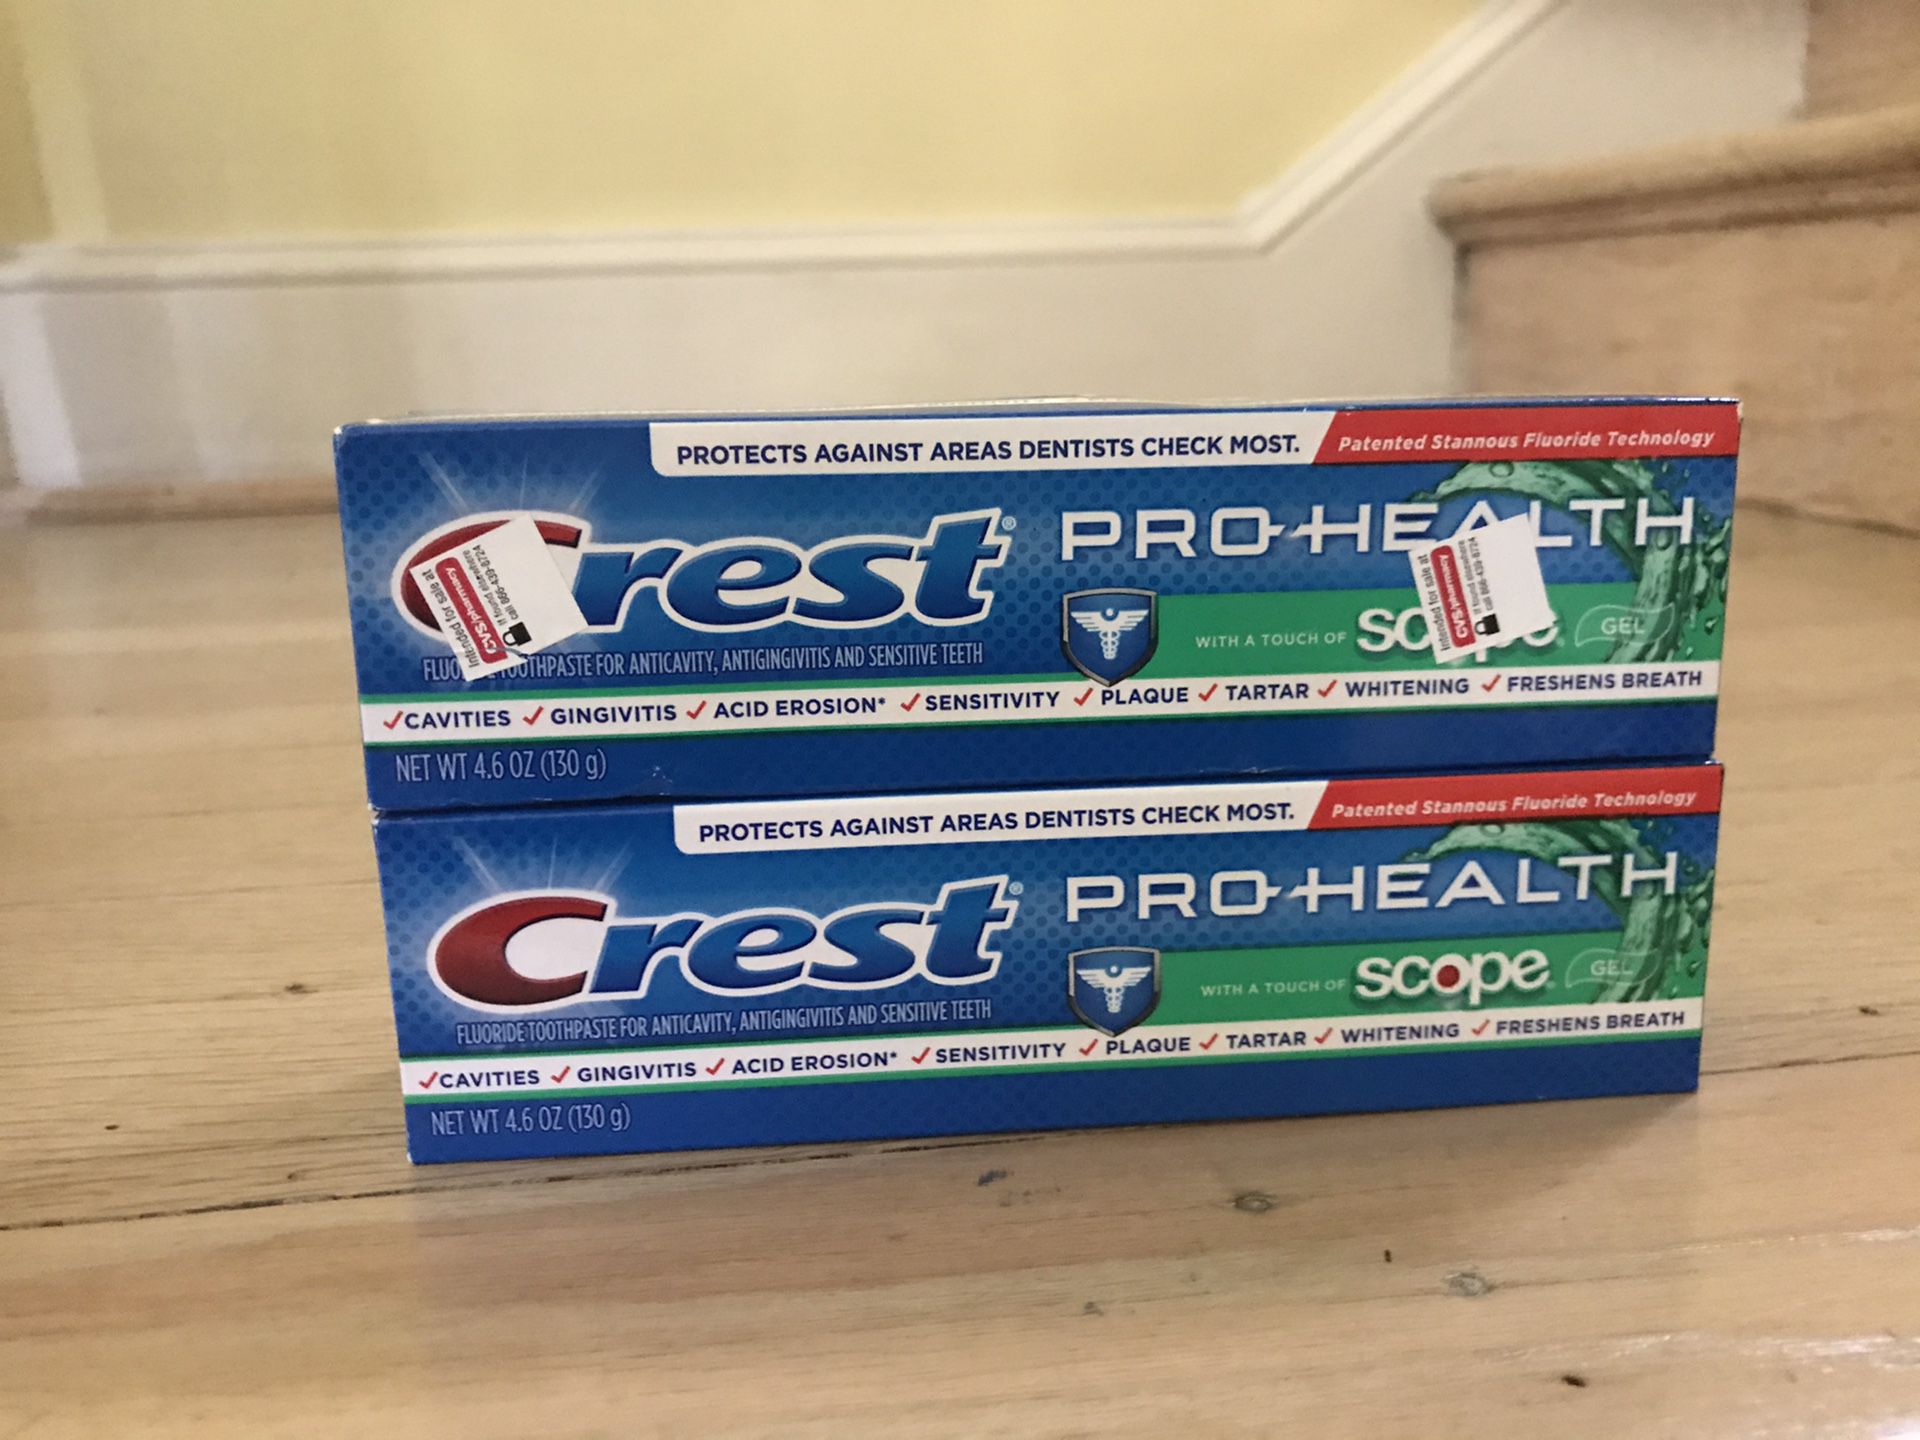 $3 Crest Pro-health with scope bundle.